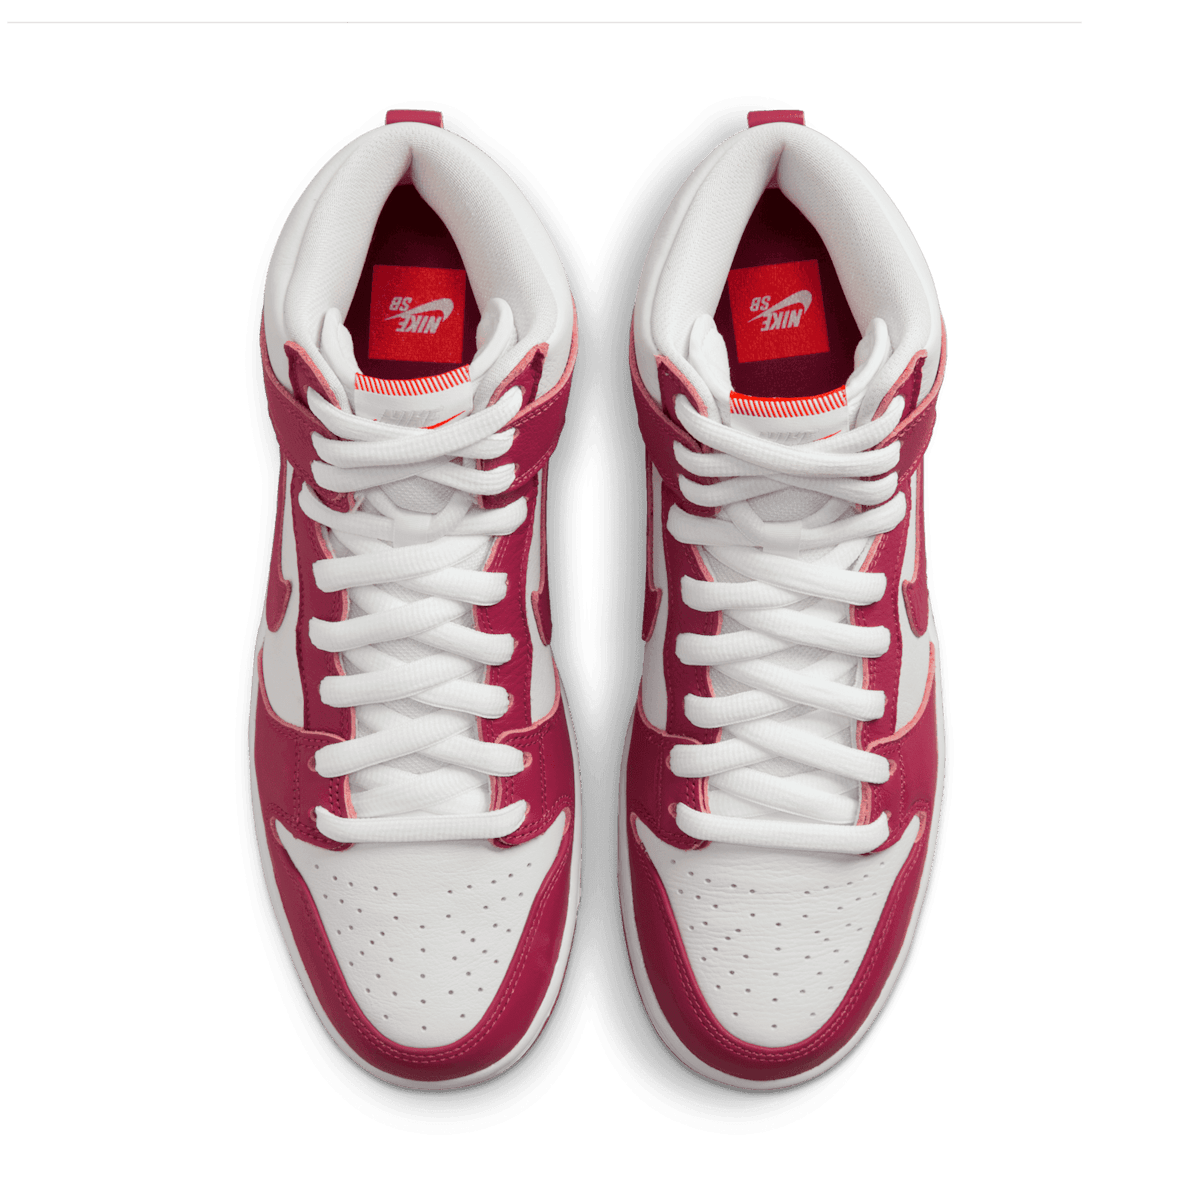 Nike SB Dunk High Sweet Beet - DQ4485-600 Raffles and Release Date